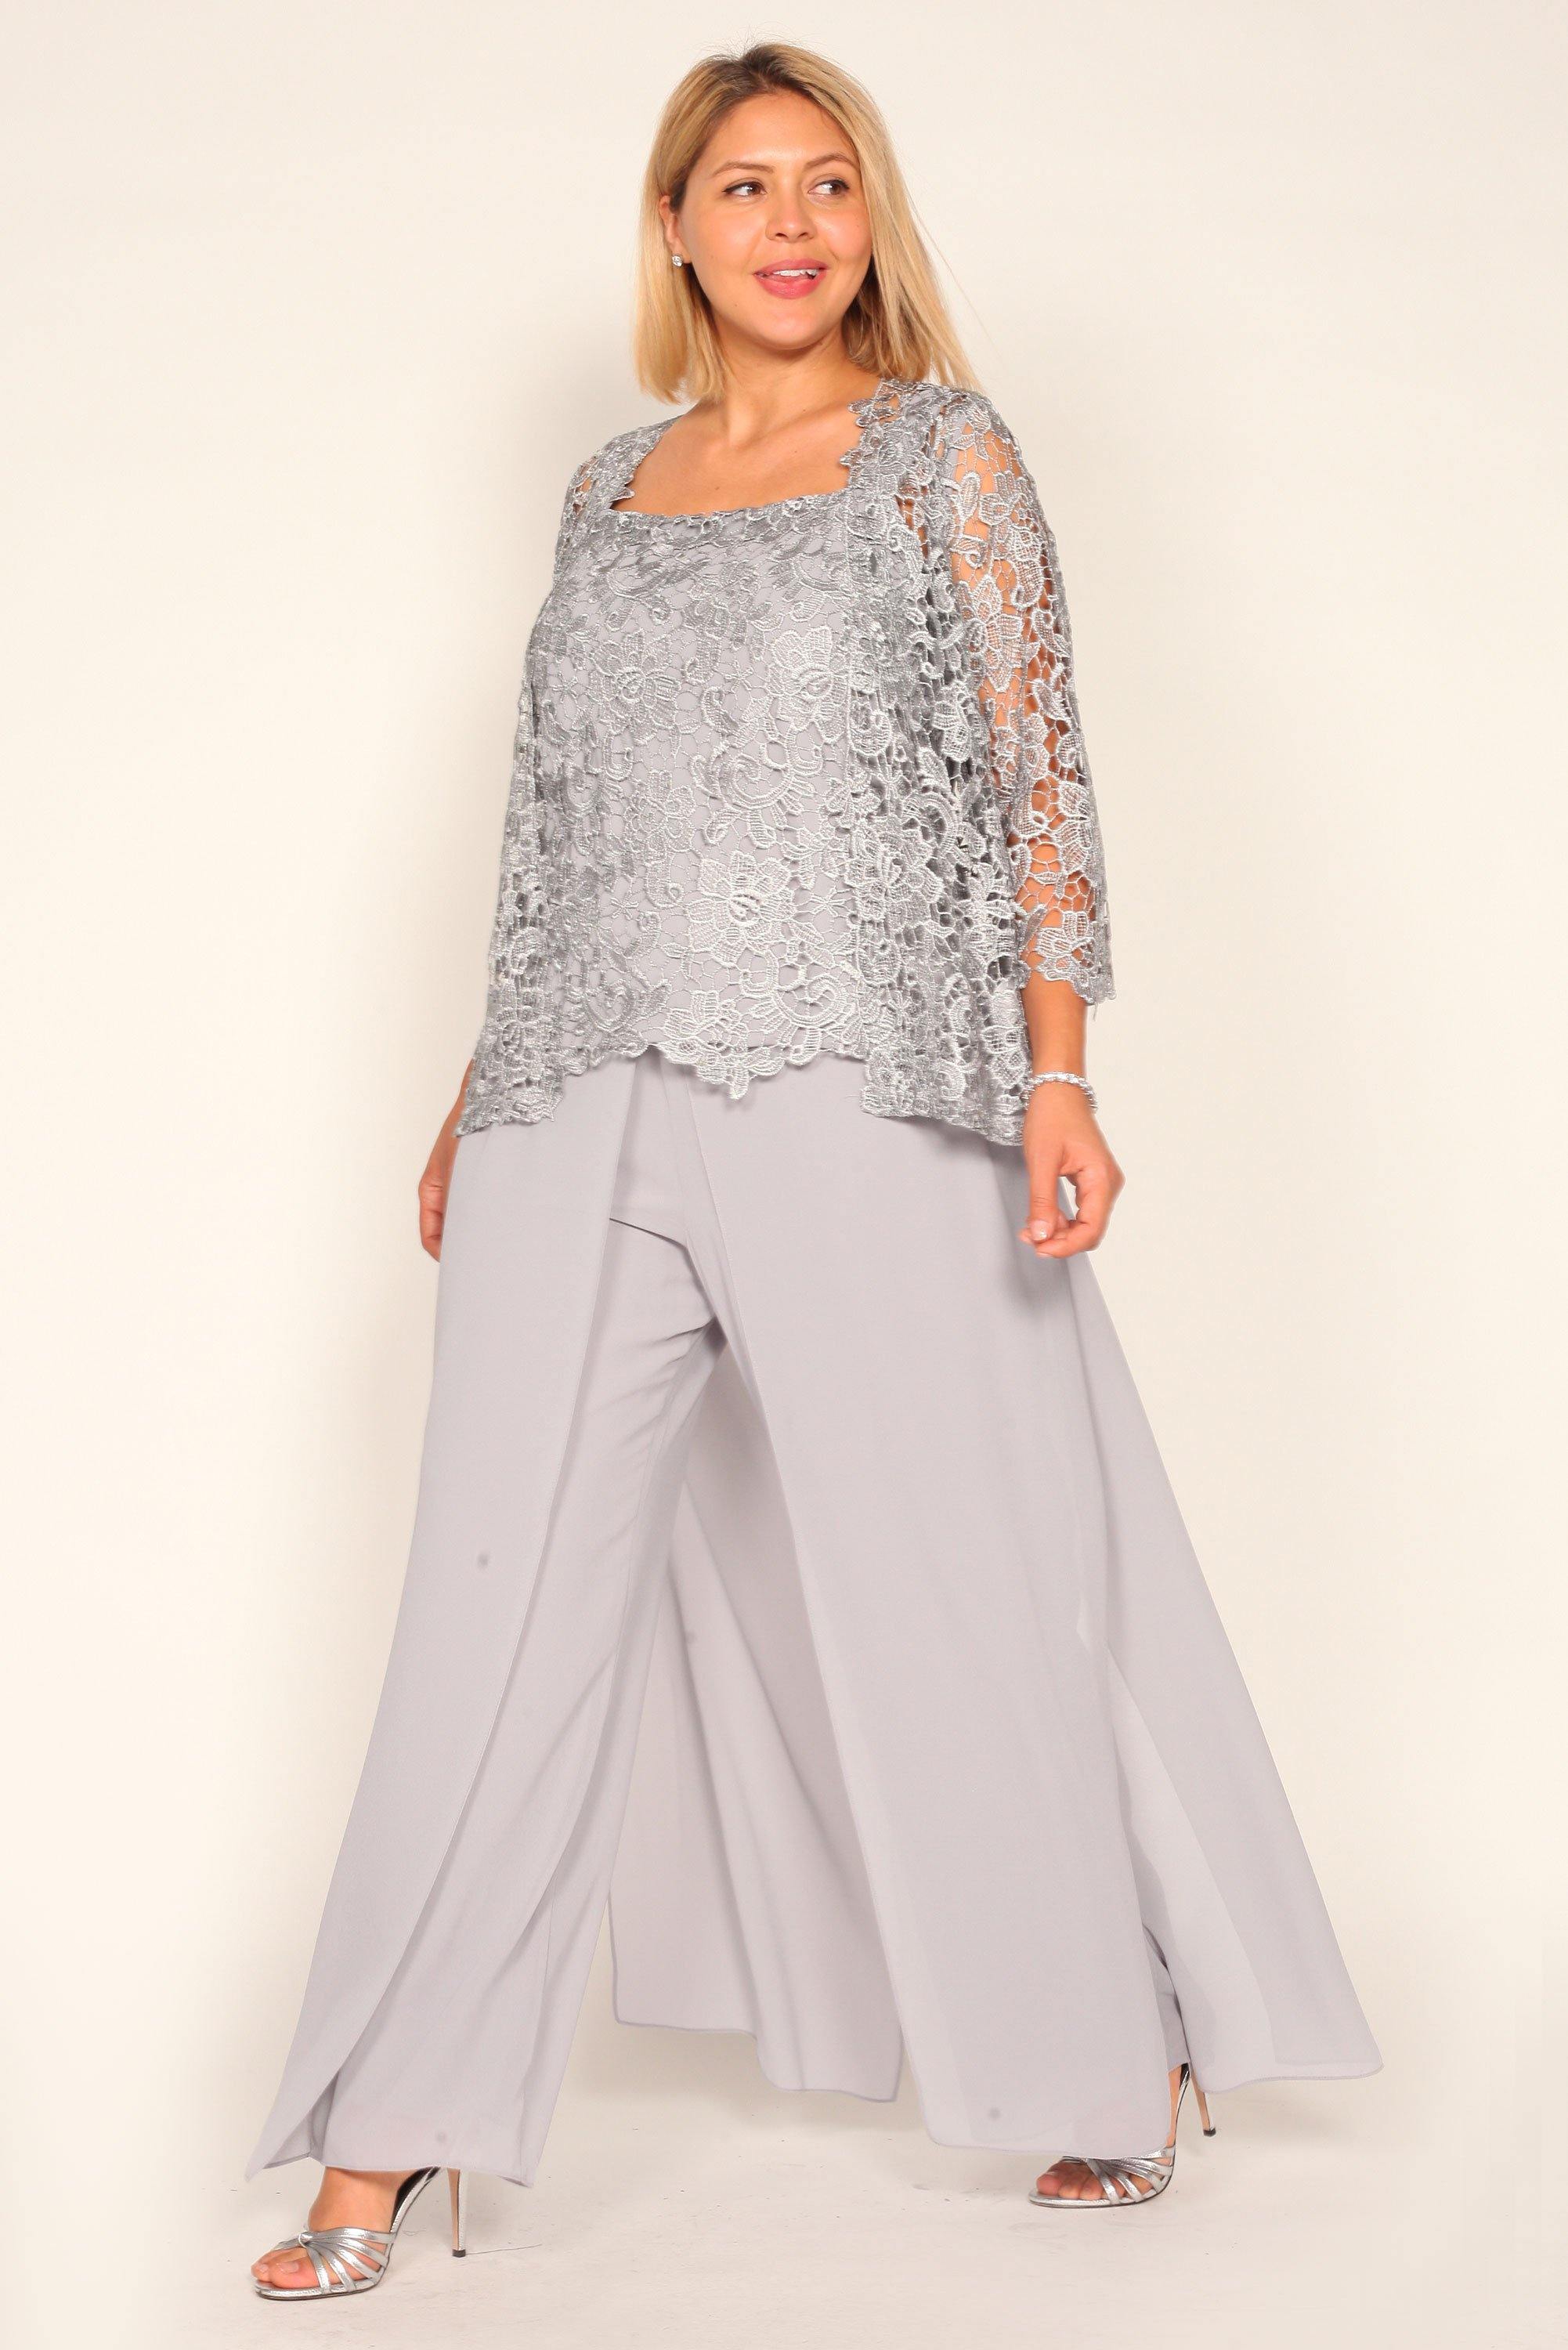 Marina Formal Pansuit Sale - The Dress Outlet